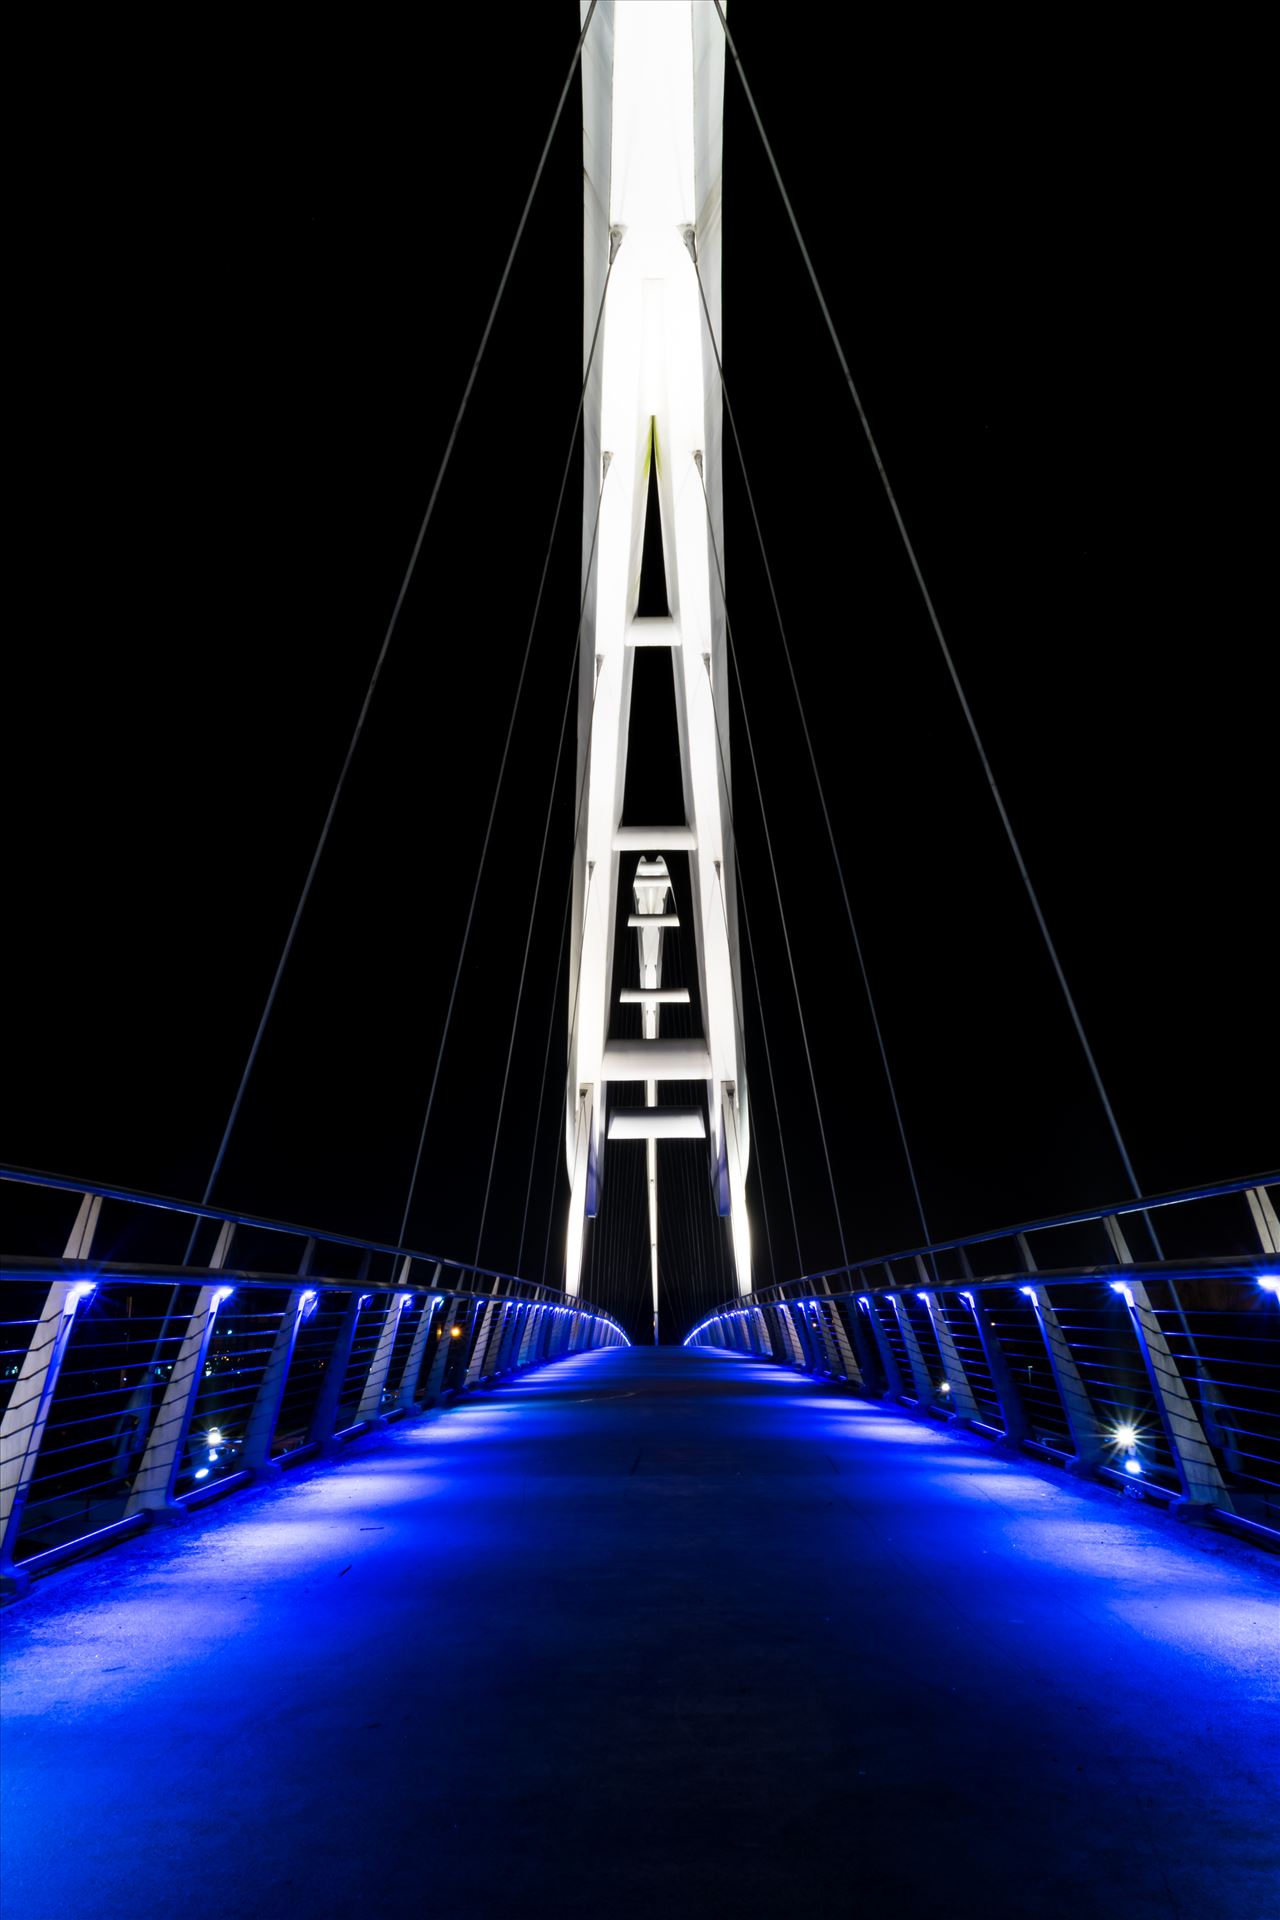 Infinity Bridge at night Stockton on Tees Infinity Bridge Stockton on Tees at night by AJ Stoves Photography